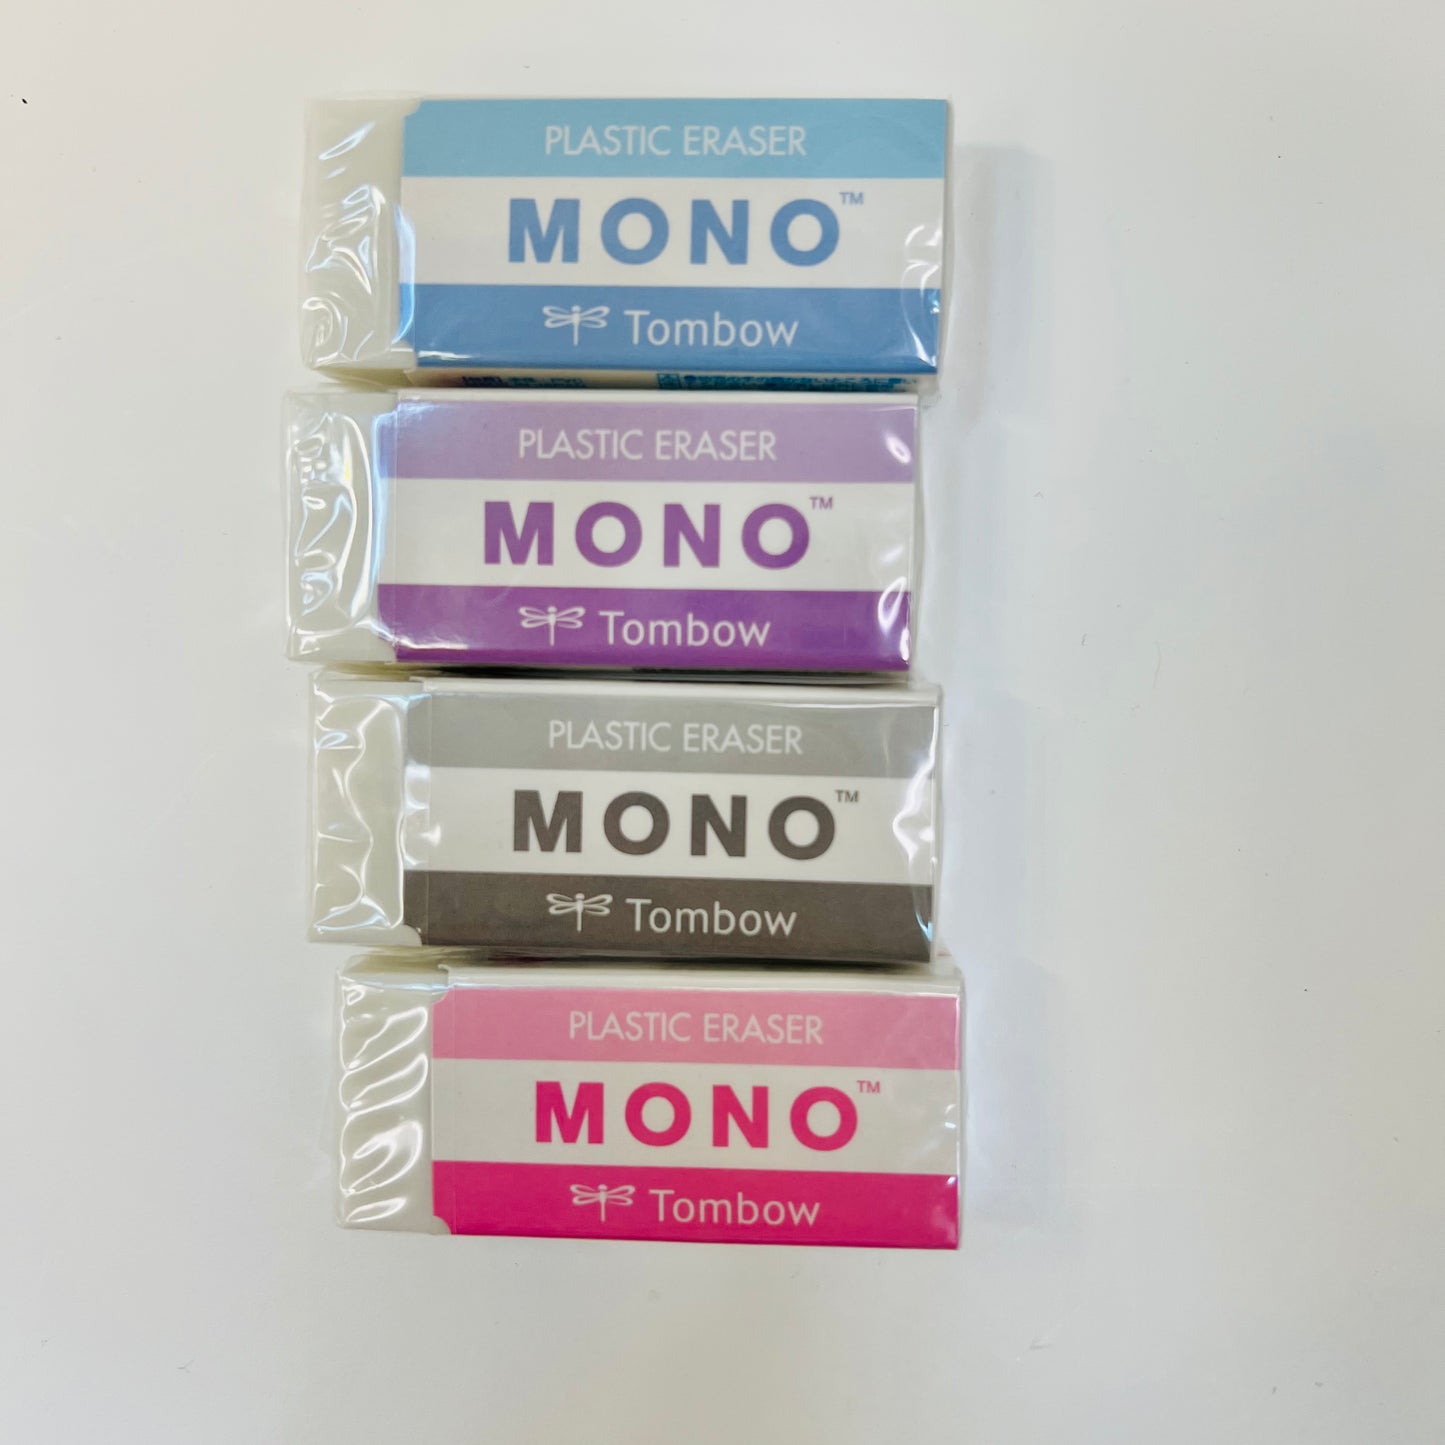 Sanrio MONO Plastic Eraser